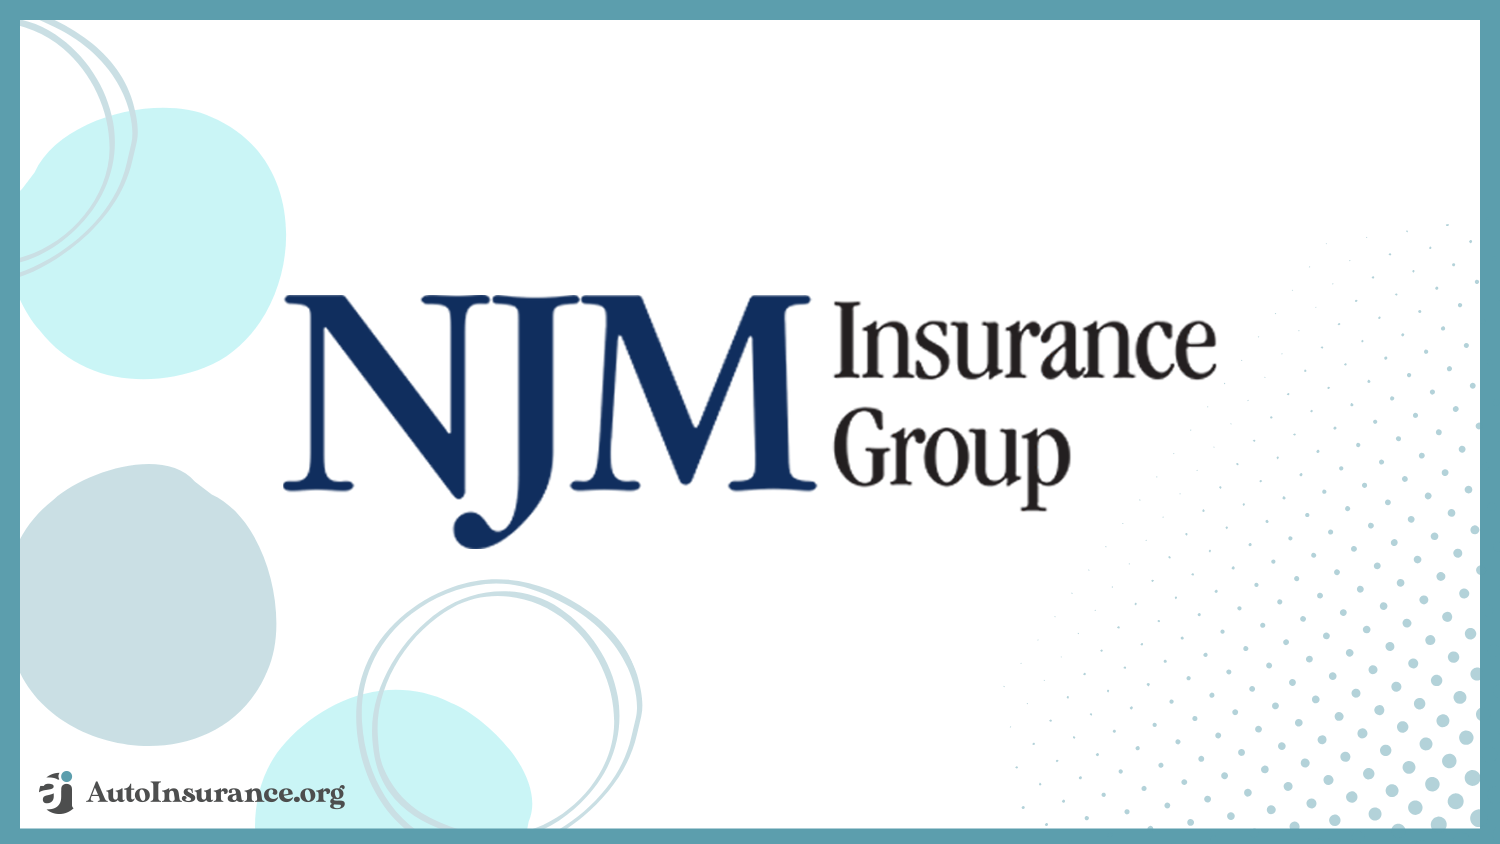 NJM insurance